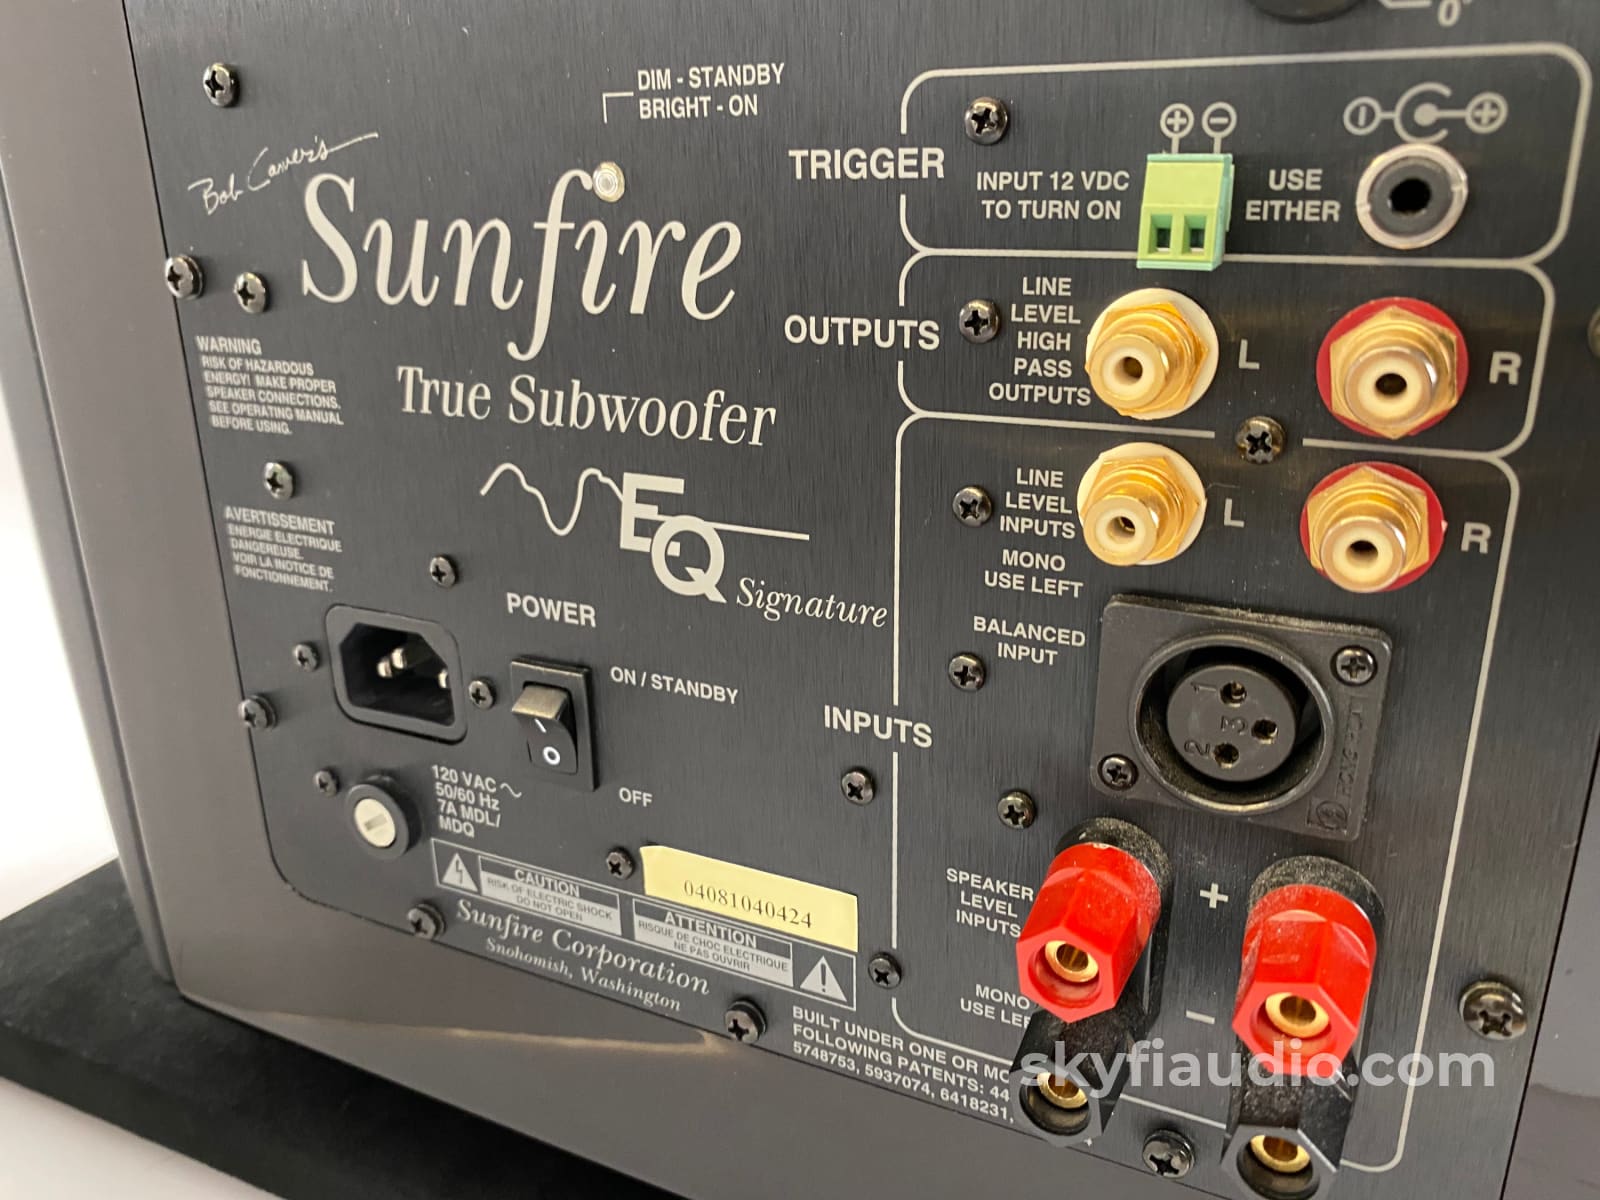 Sunfire True Subwoofer Eq Sub W/Calibration Mic - Featuring Dual 12 Drivers Speakers